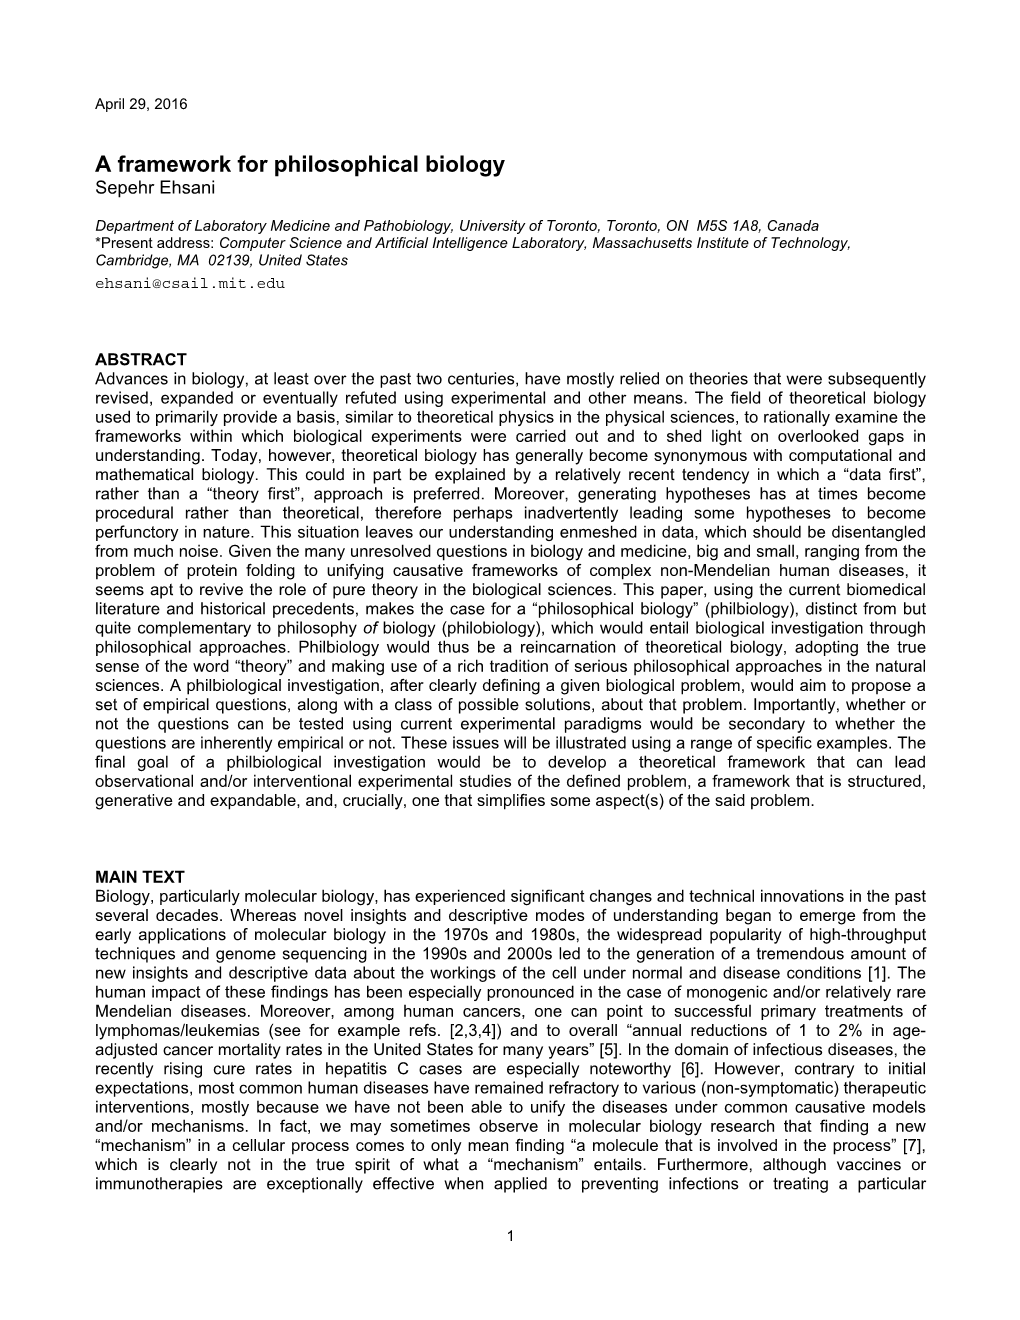 A Framework for Philosophical Biology Sepehr Ehsani